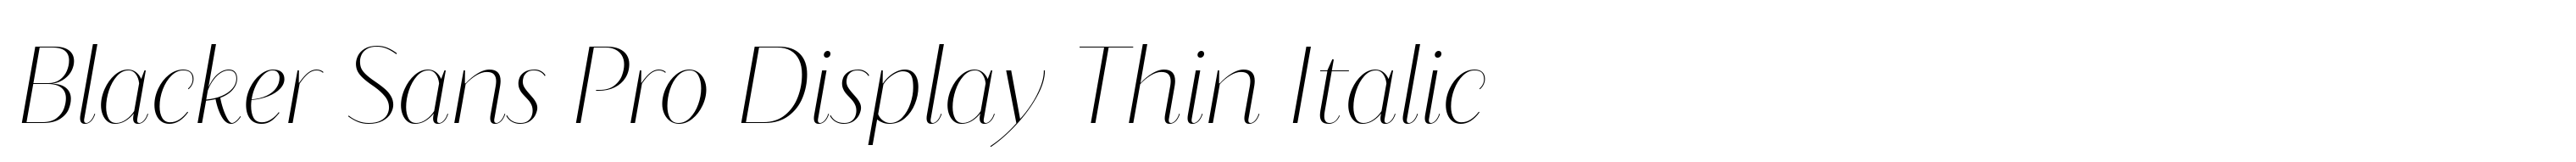 Blacker Sans Pro Display Thin Italic